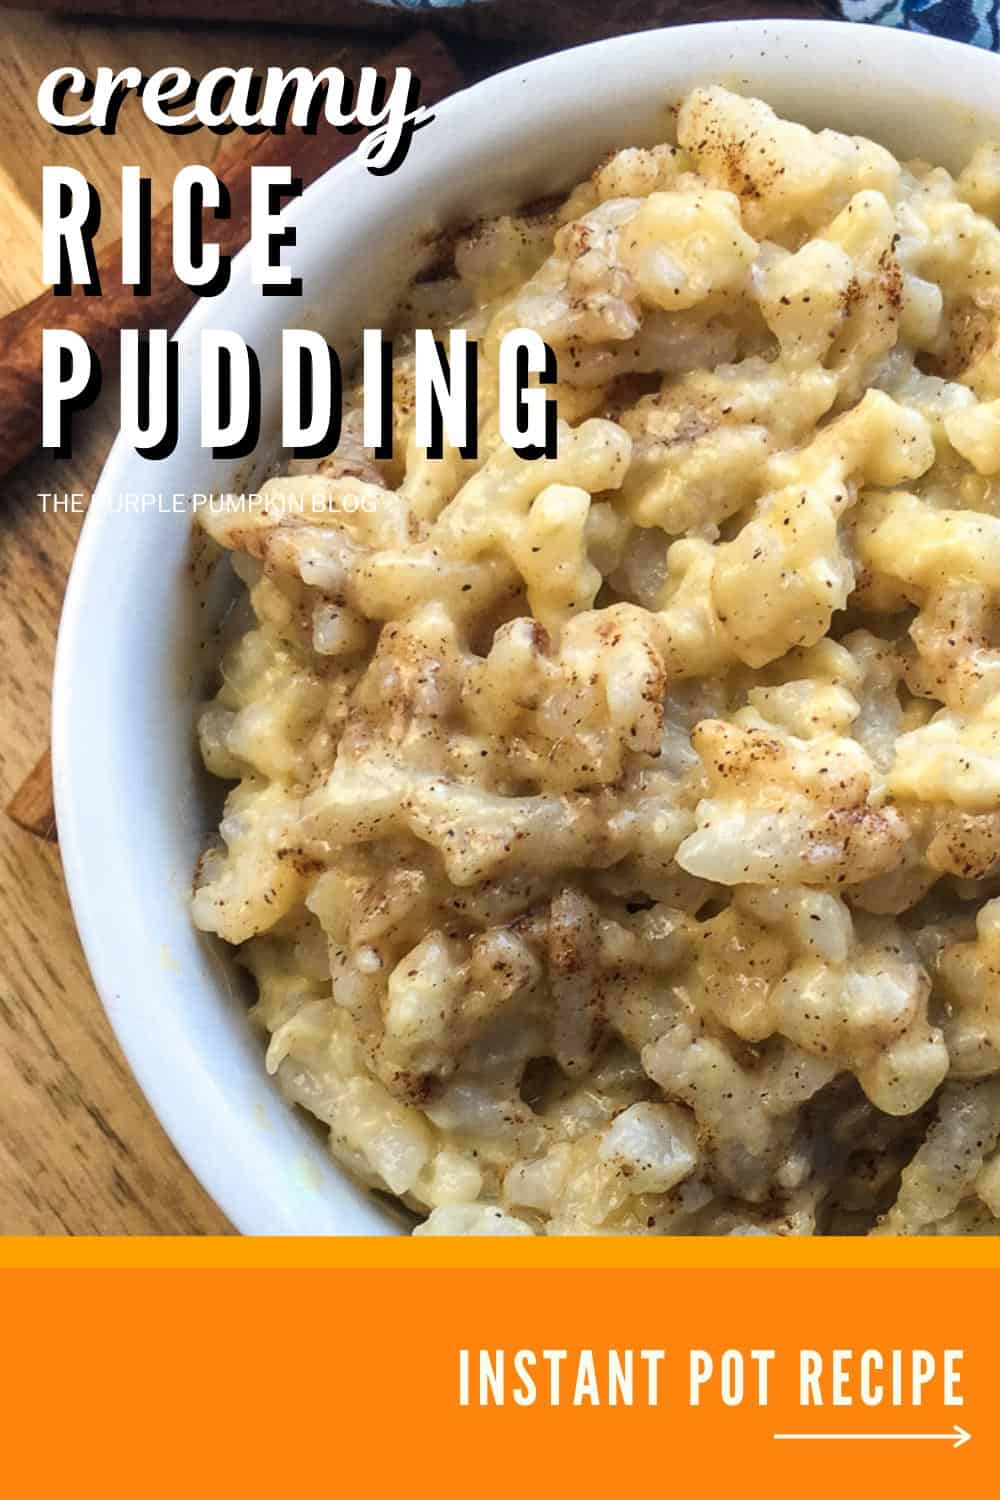 Creamy-Rice-Pudding-Instant-Pot-Recipe